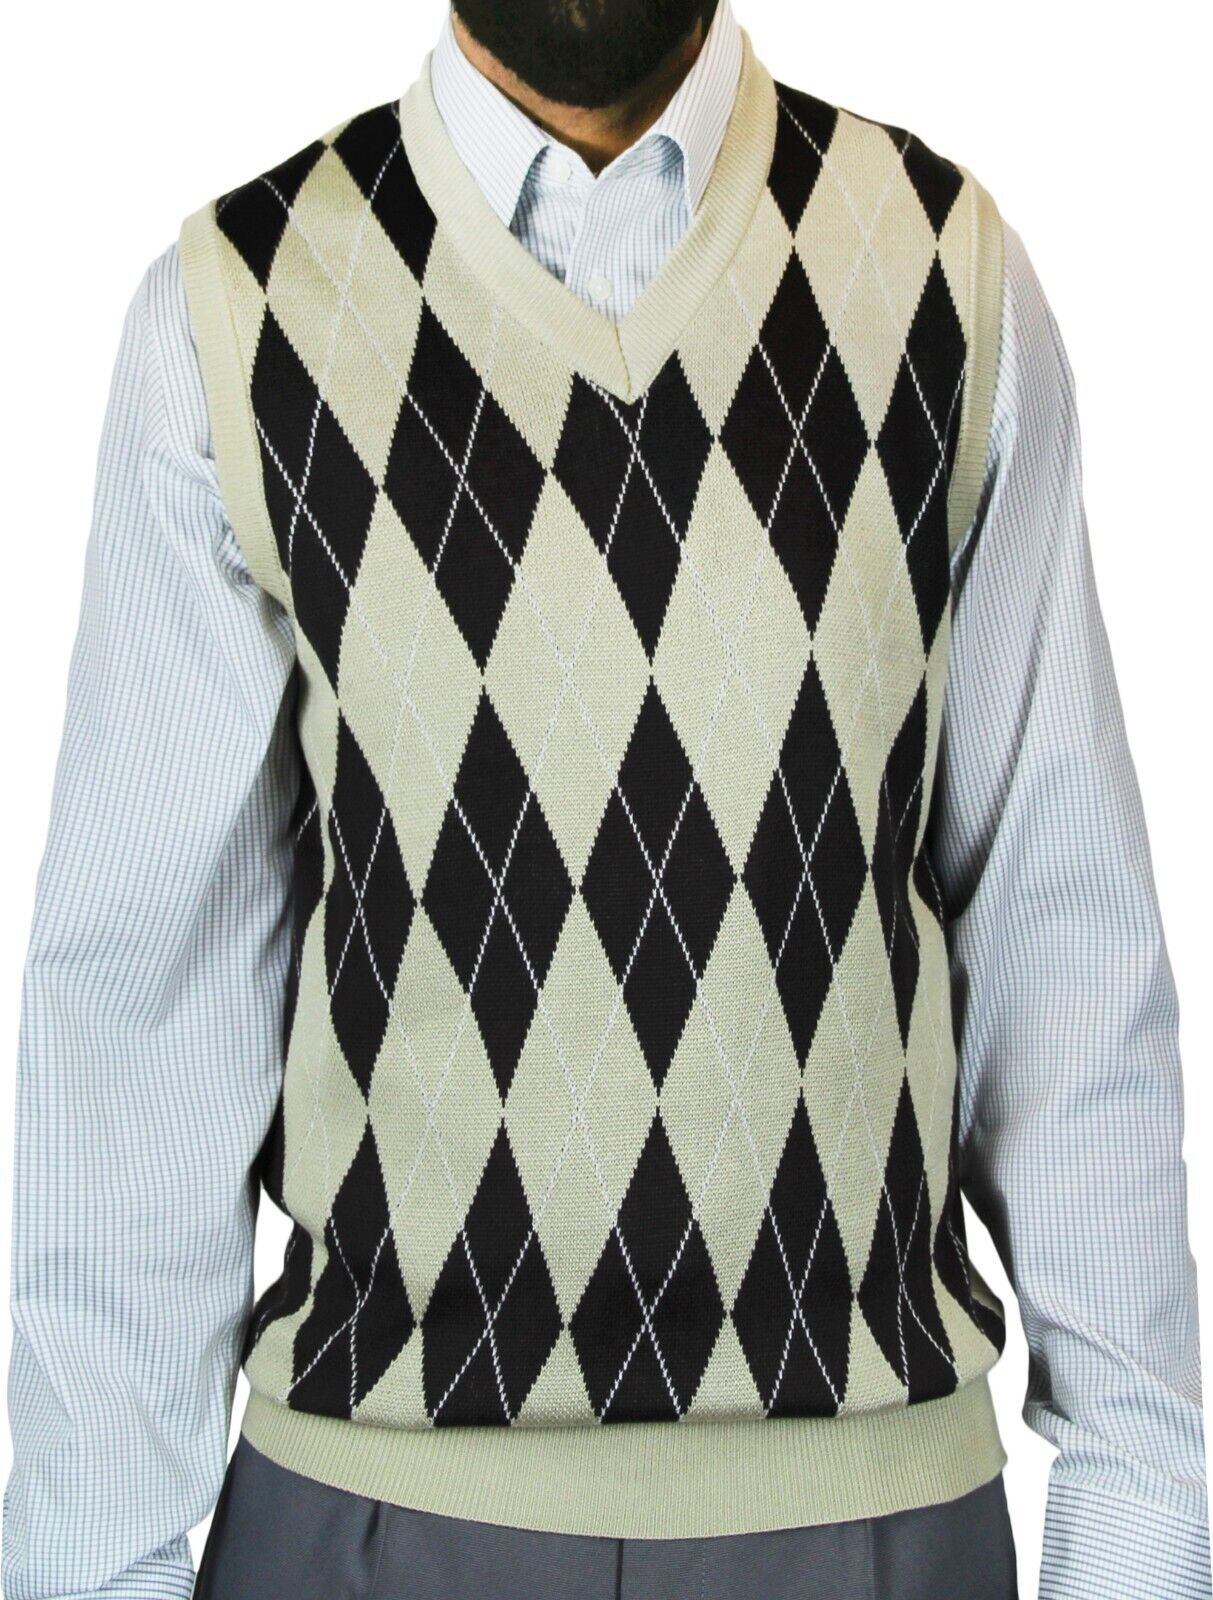 Blue Ocean Mens Big & Tall Jacquard Sweater Vest (sv-245bm)